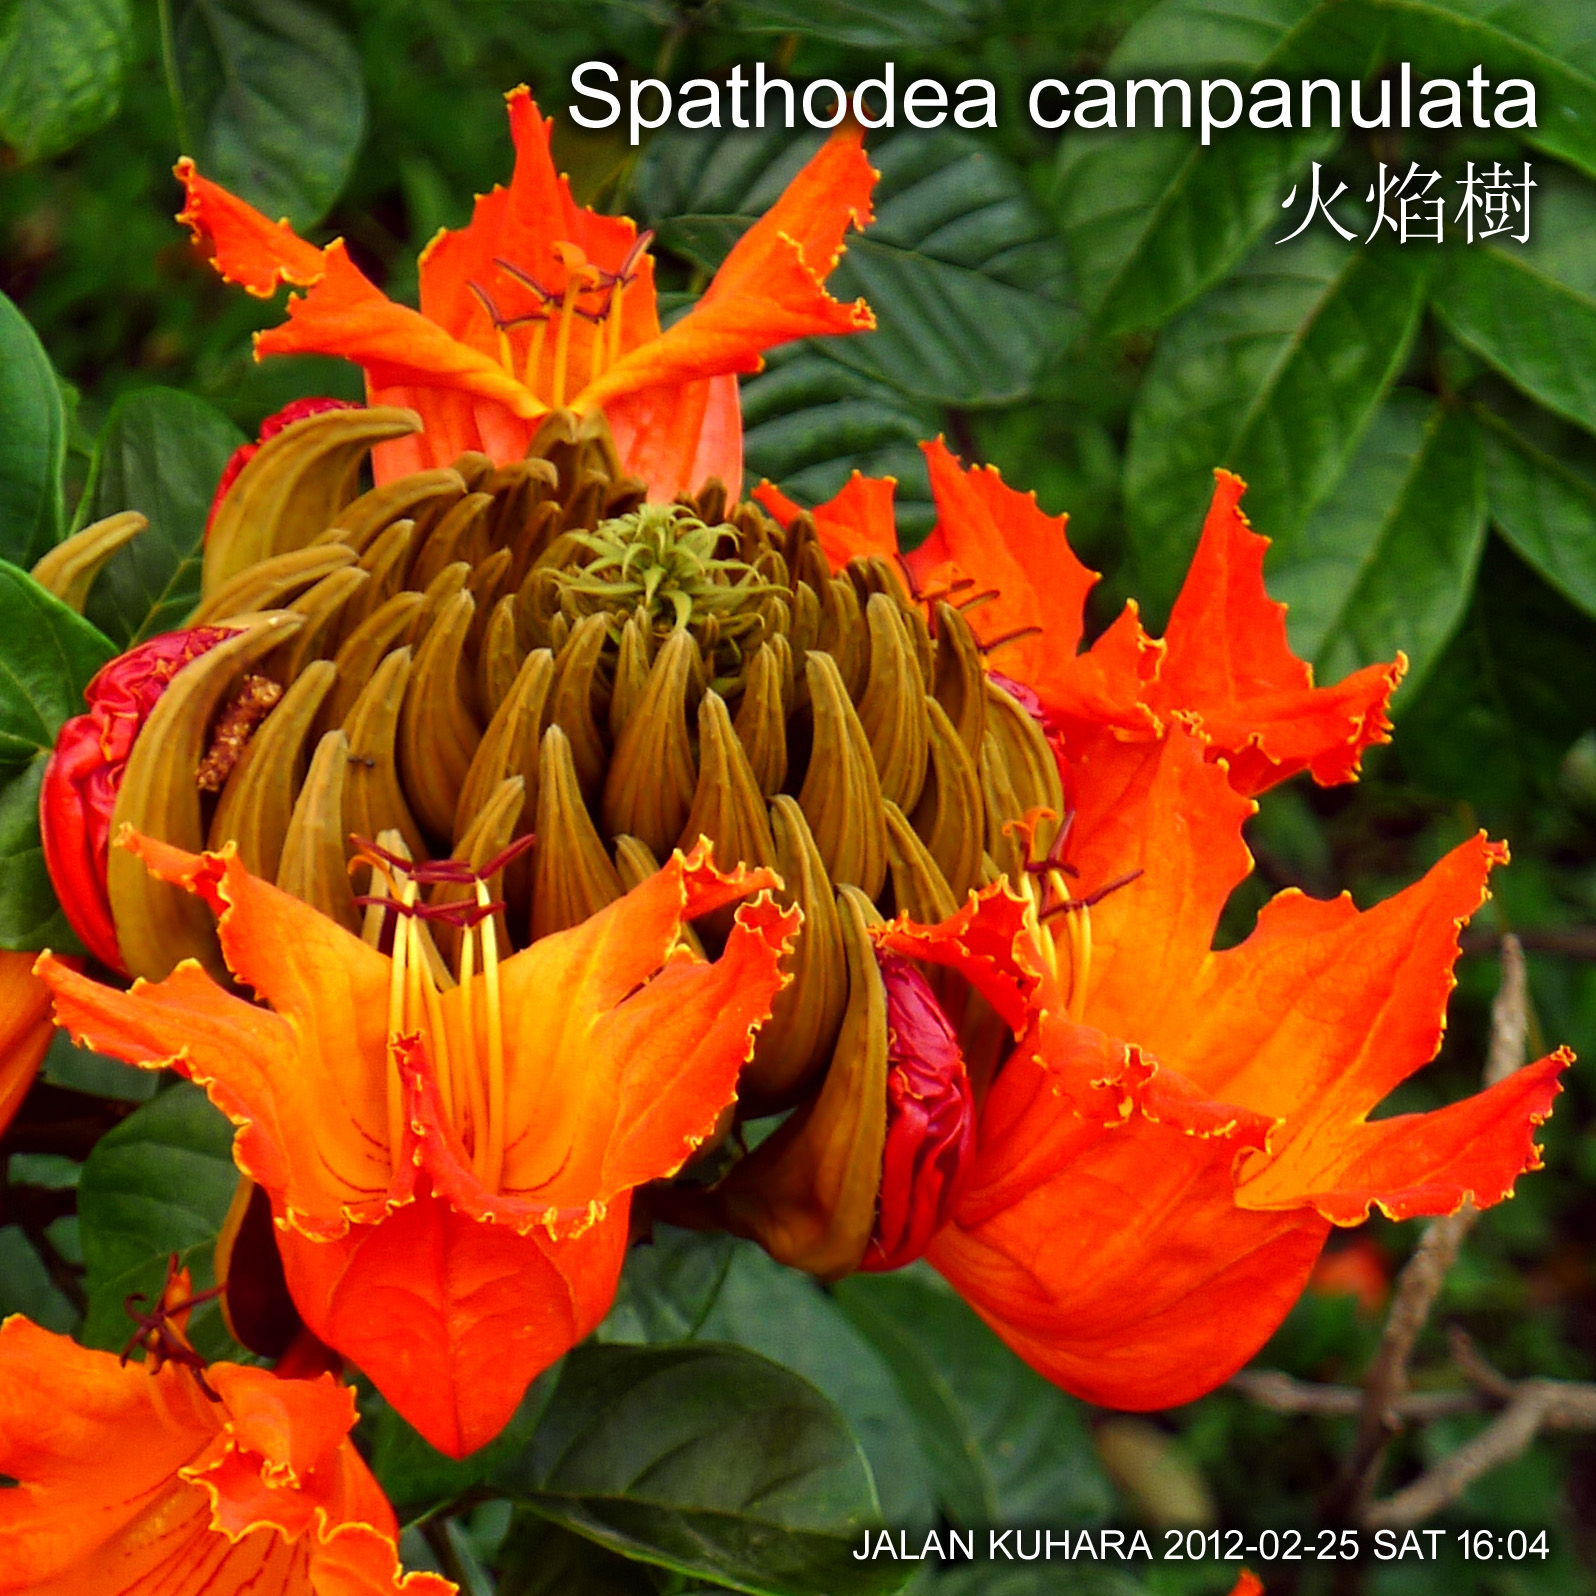 Flower of Spathodea campanulata 火焰樹